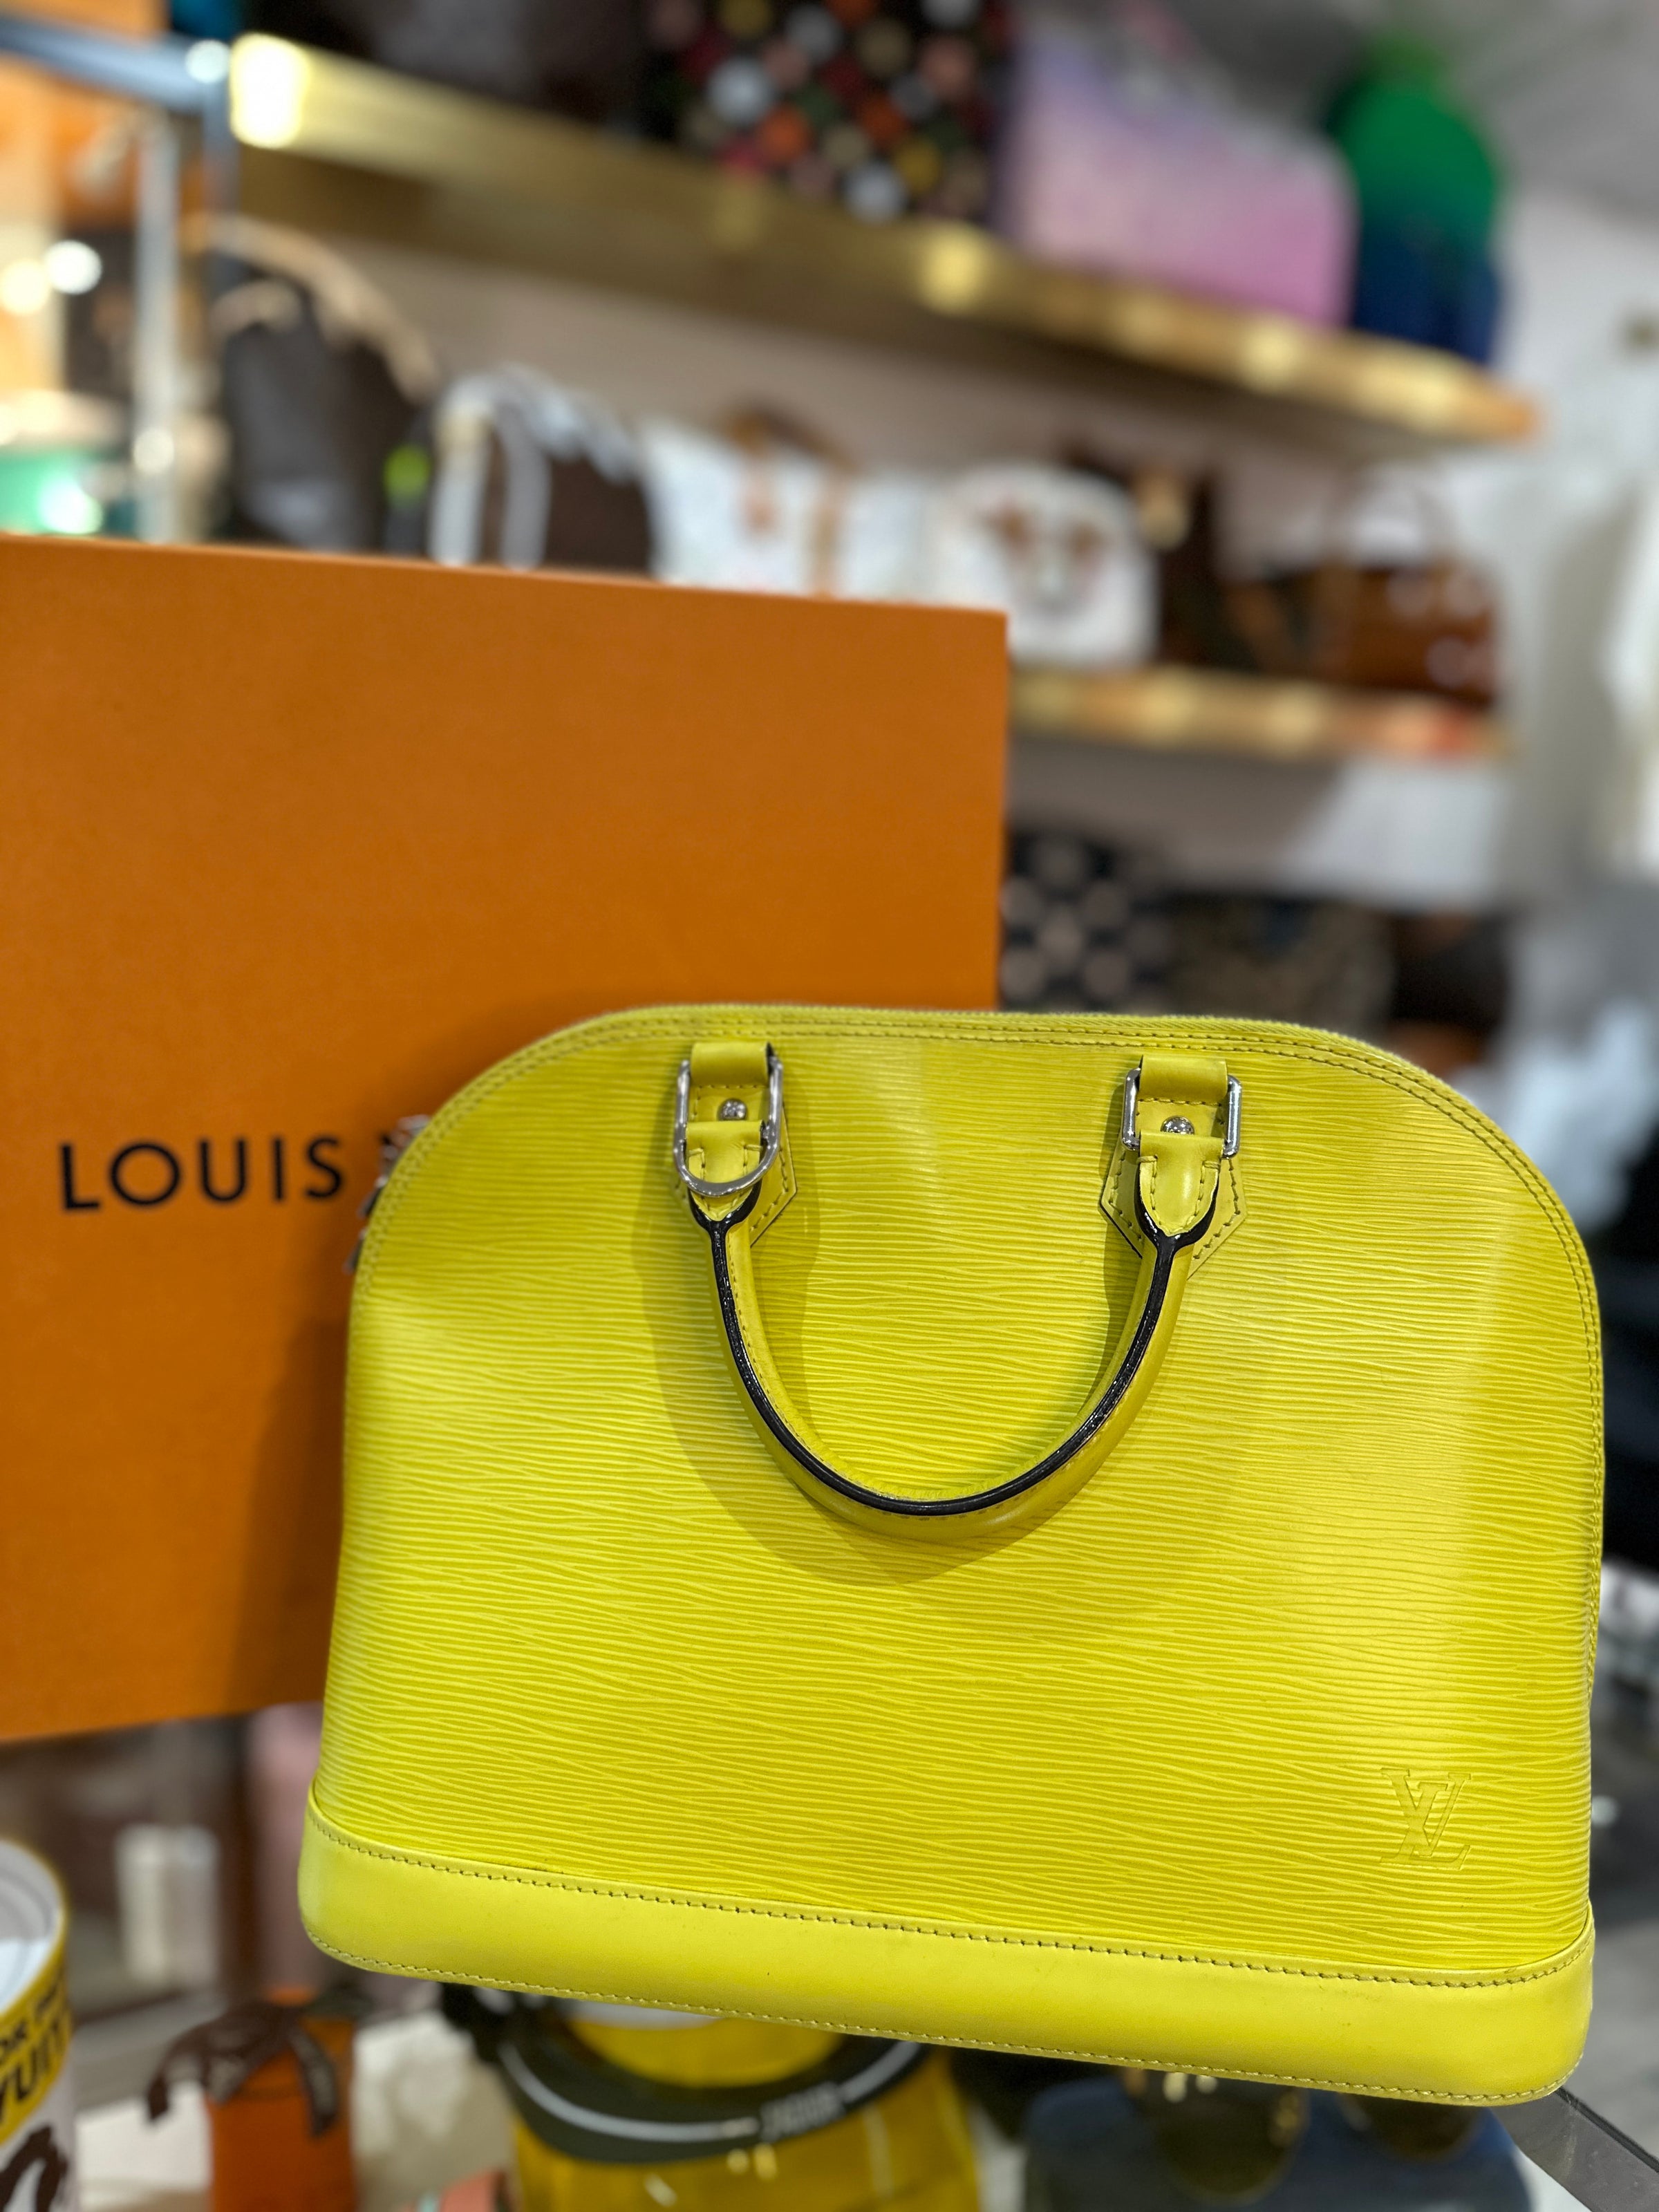 Designer Consigner - Louis Vuitton Damier Duomo Bowling Bag, $1,002.99!  Hurry, it won't be here long! #louisvuitton #designerconsignerhockessin  #shopdelaware #shopphilly #shoplocal #upscaleresale #consignmentboutique  #luxurybrands #highend #luxury